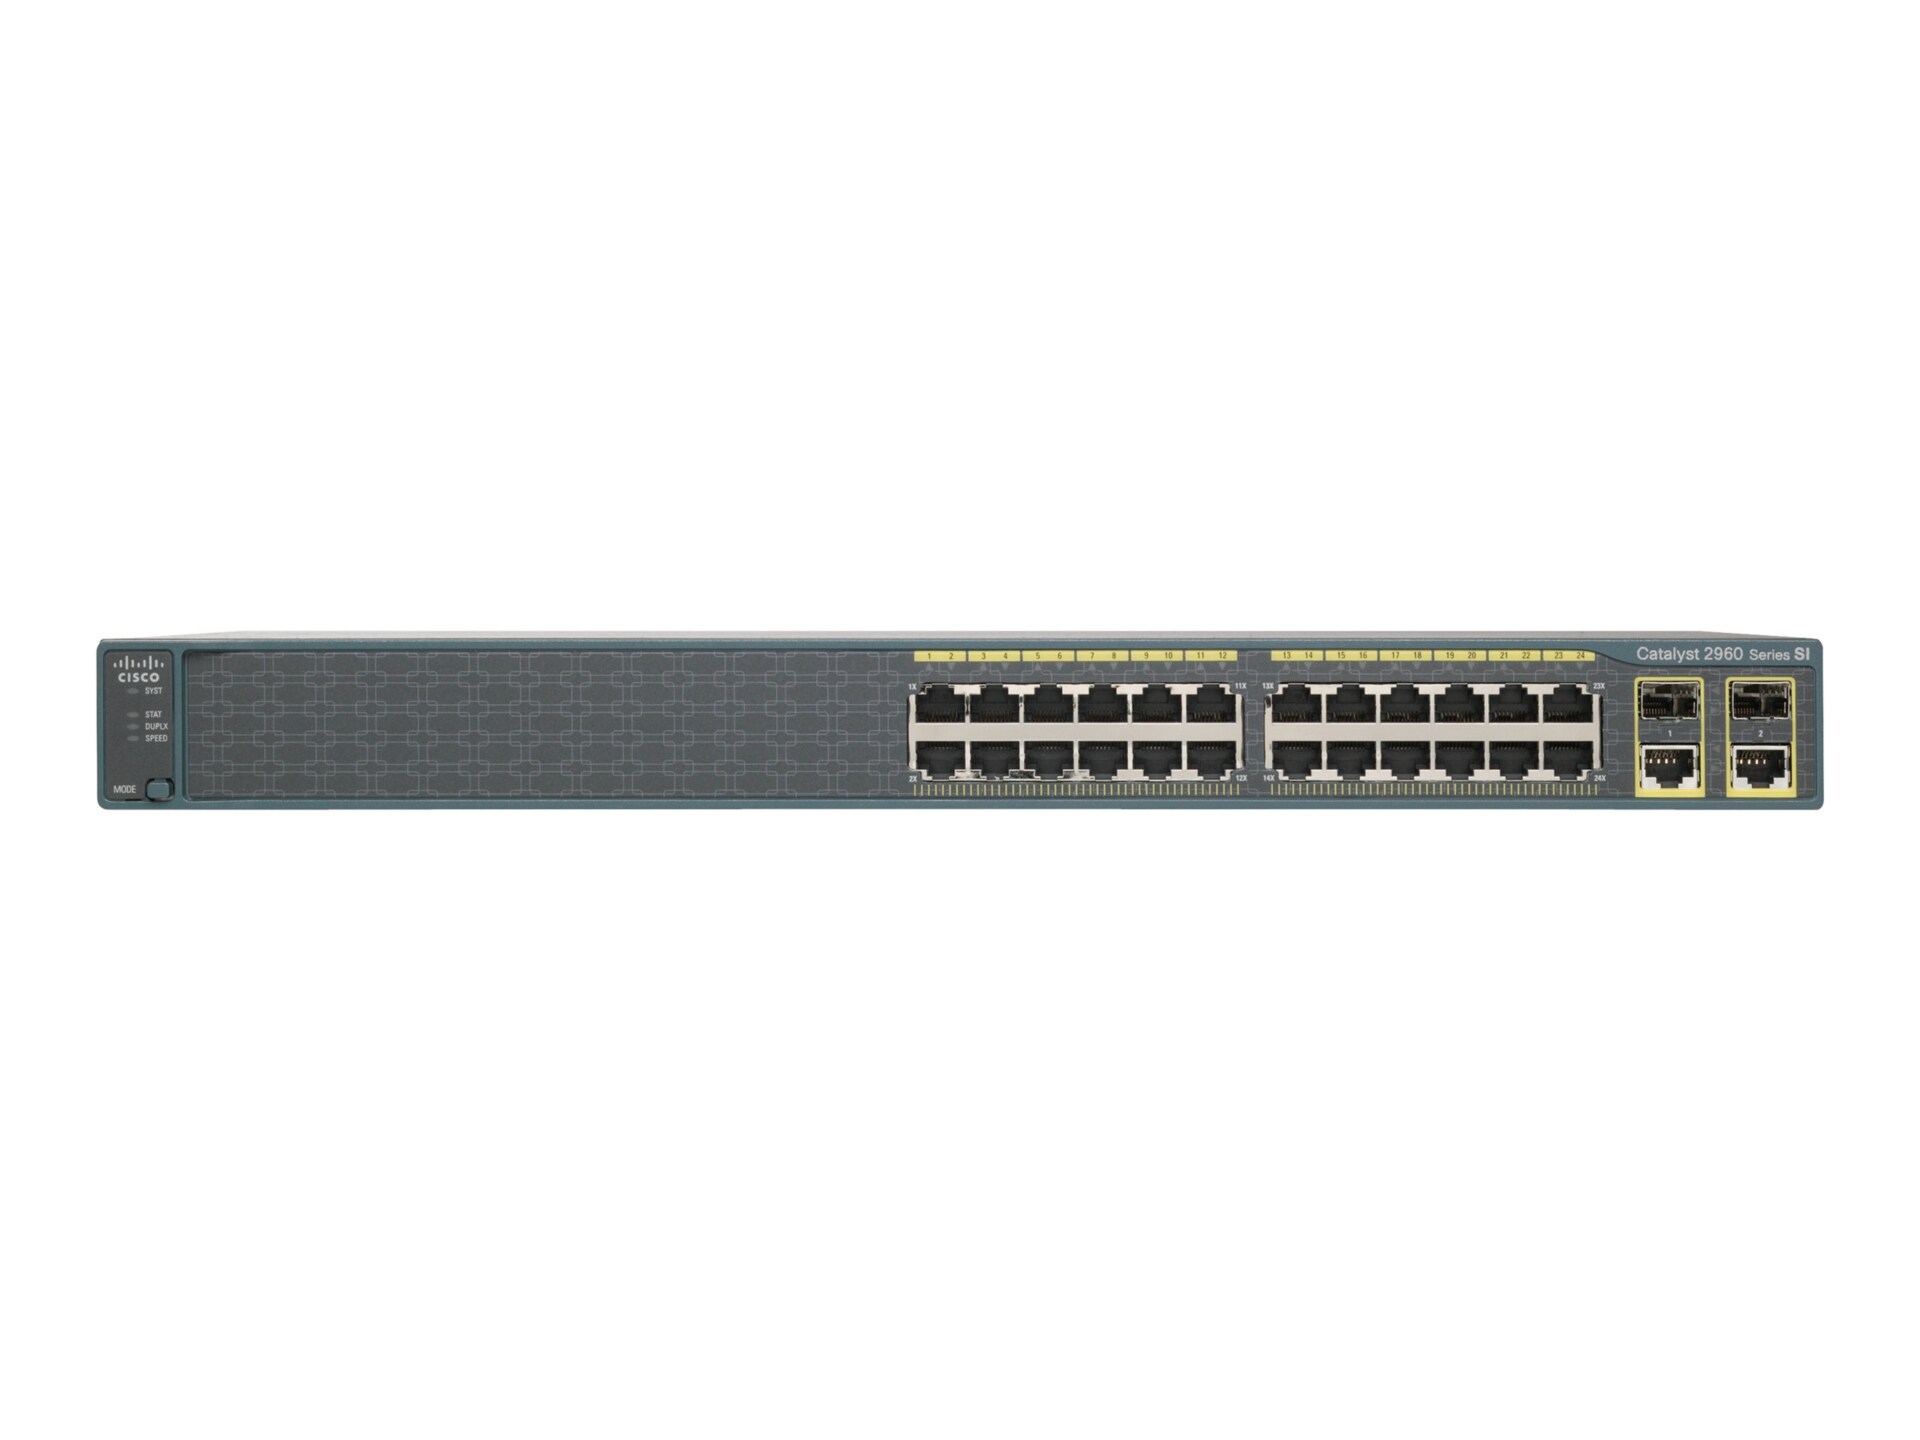 Cisco Catalyst 2960 Plus 24tc S 24 Port Fast Ethernet Switch Ws C2960 24tc S Switches Cdw Com